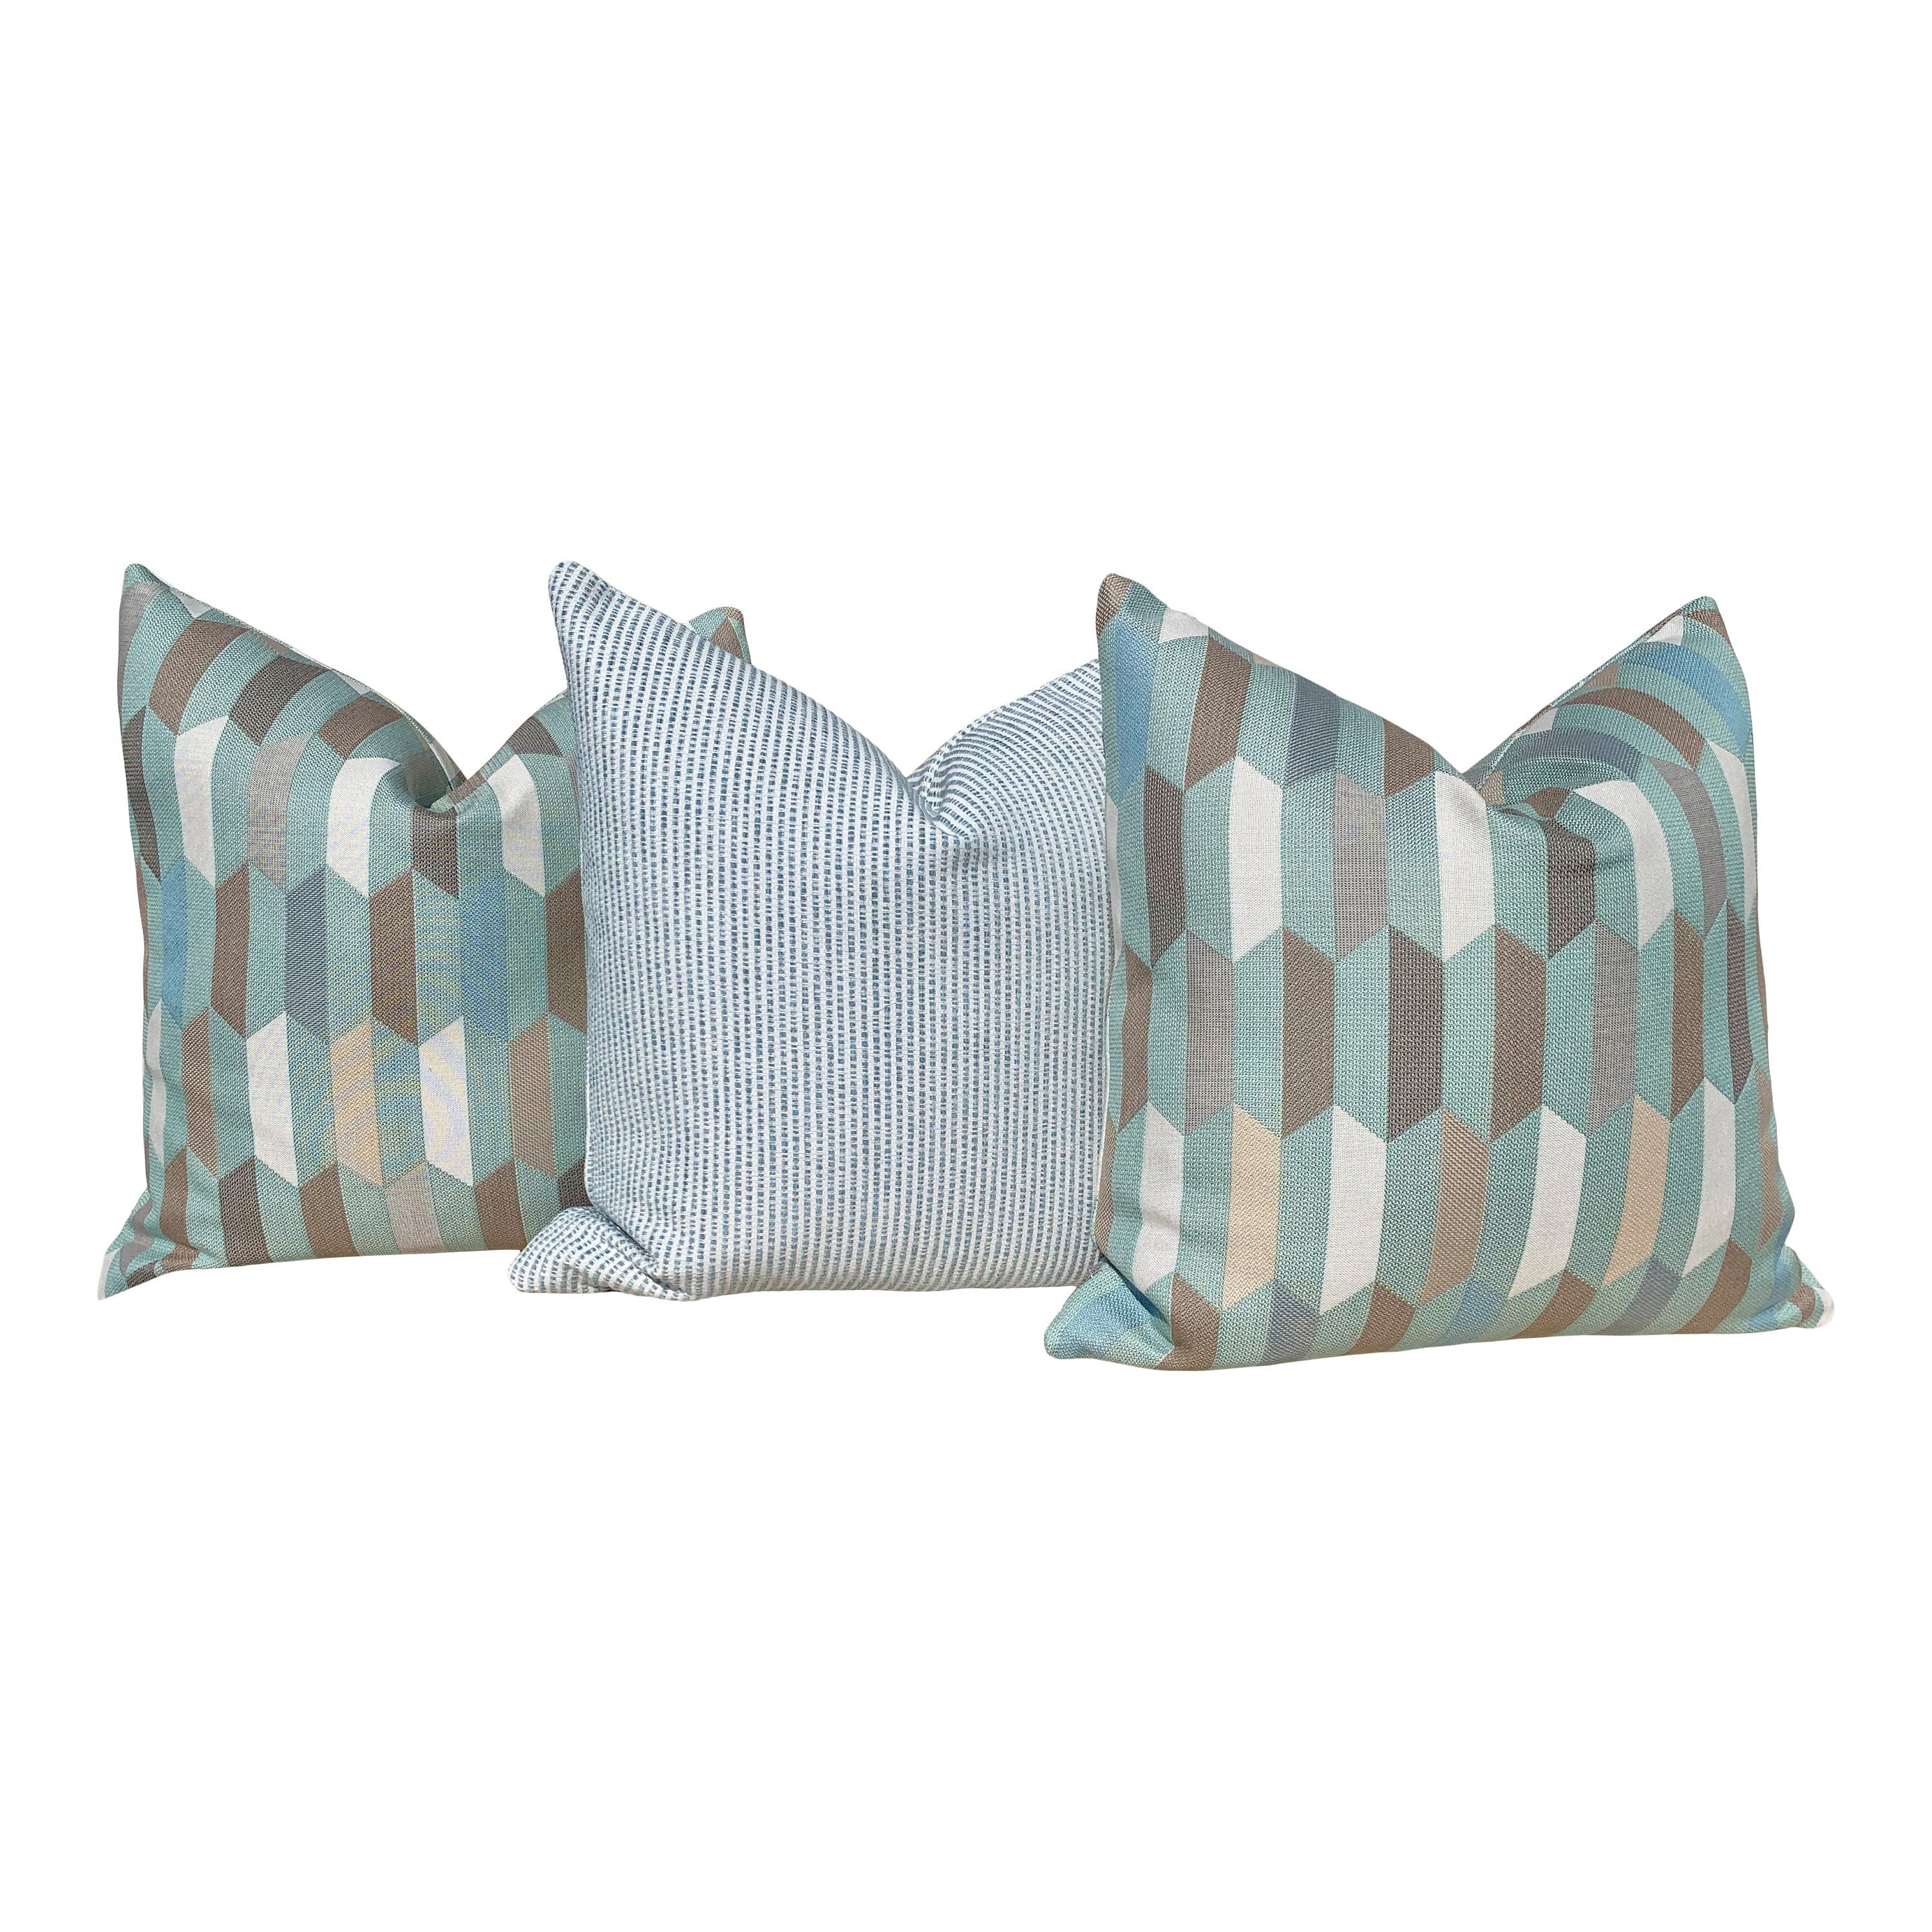 Sunbrella Geometric Outdoor Pillow in Aqua Green. Outdoor Lumbar Cushion Cover in Aqua, accent outdoor pillow, decorative cushion.